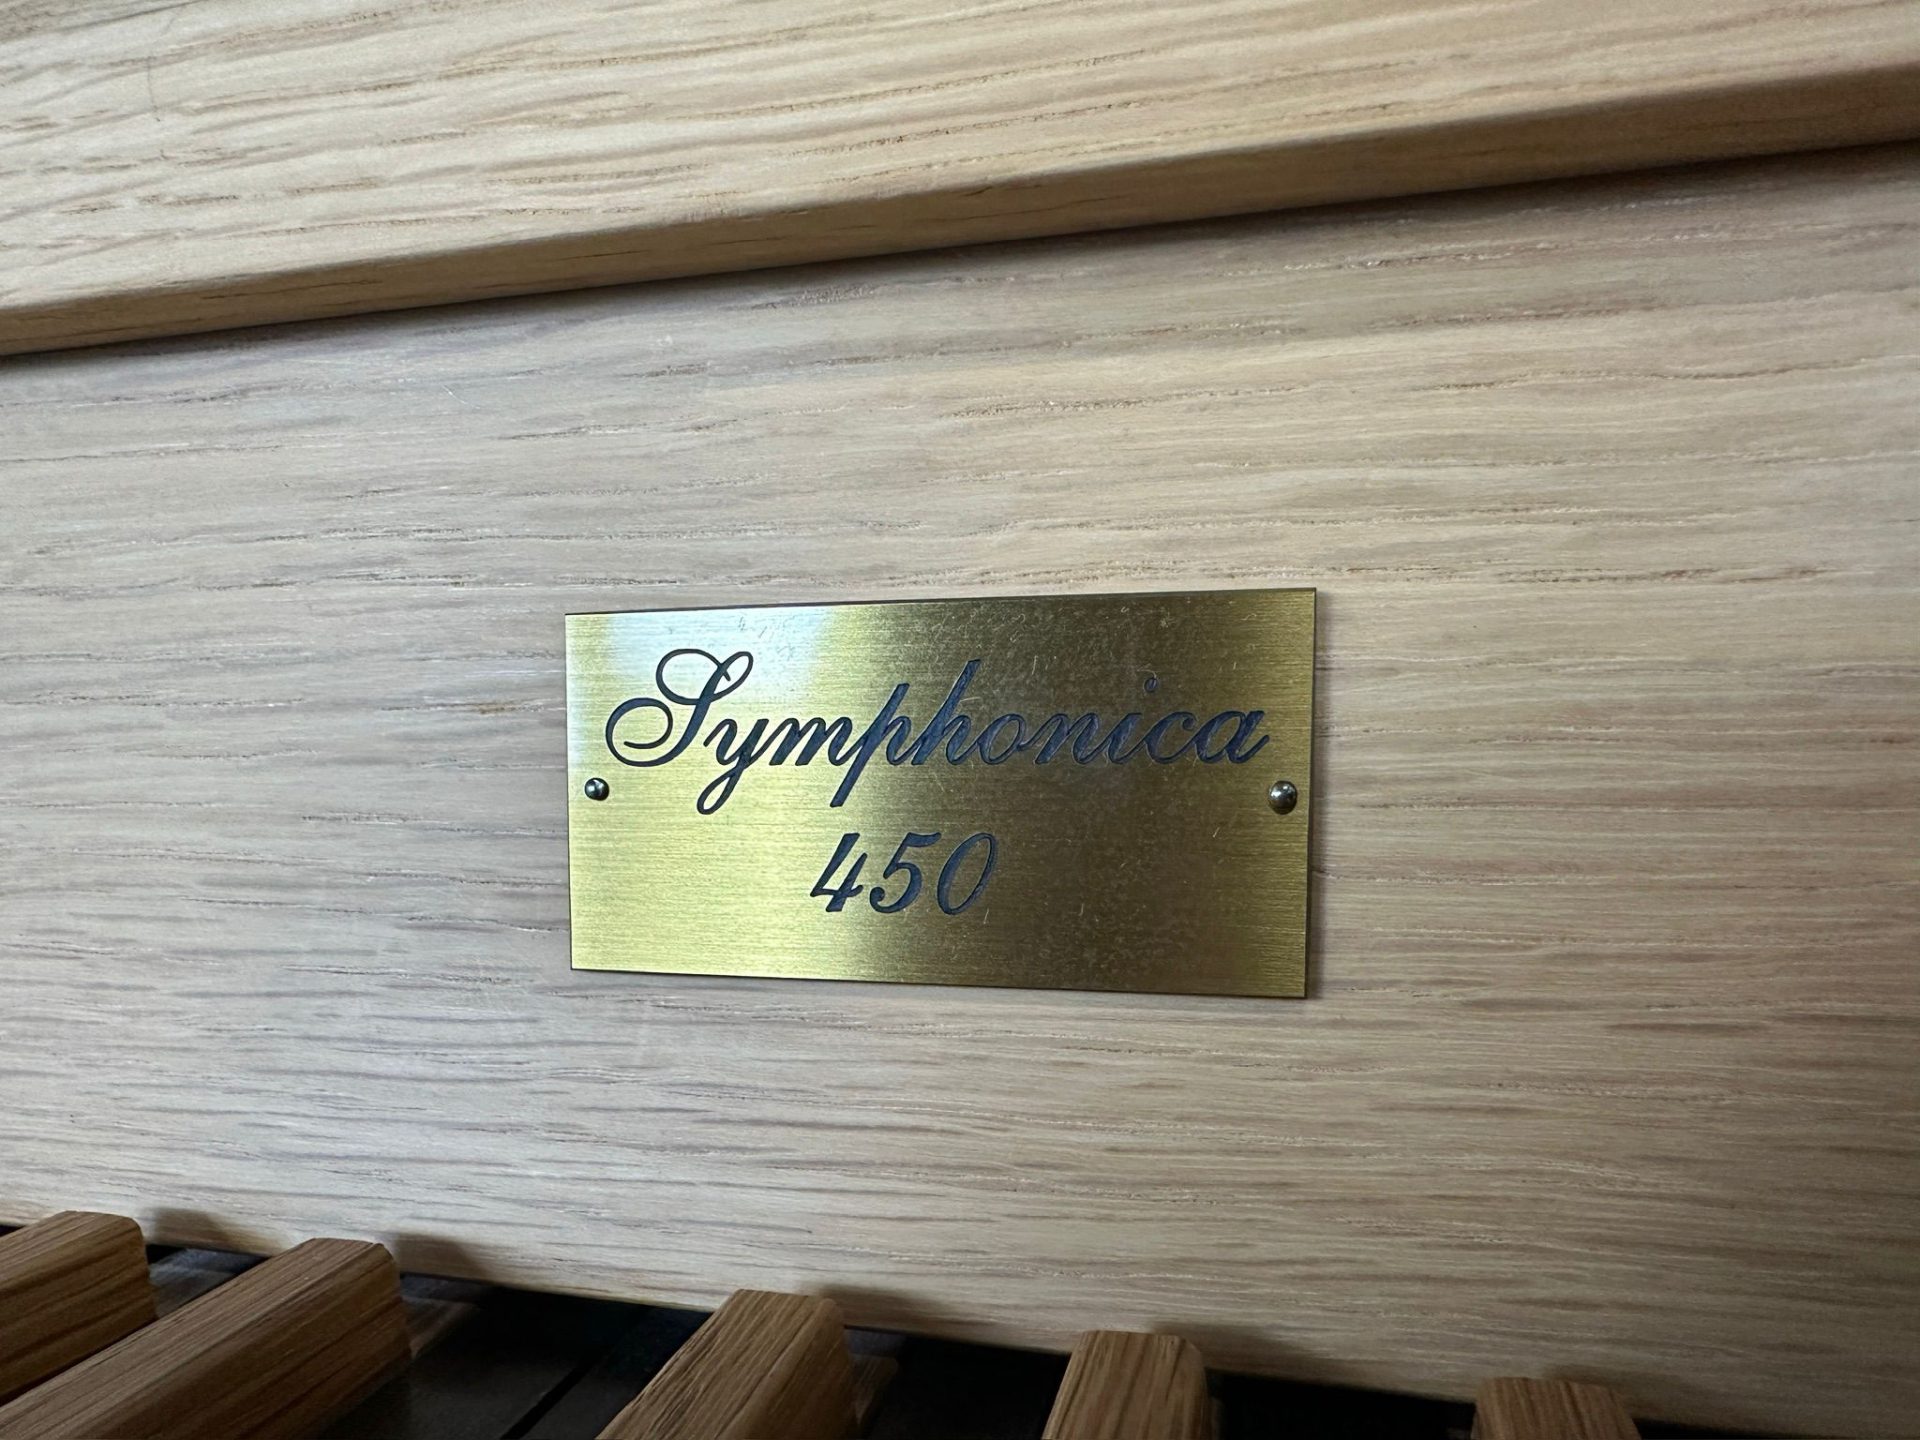 Johannus Symphonica 450